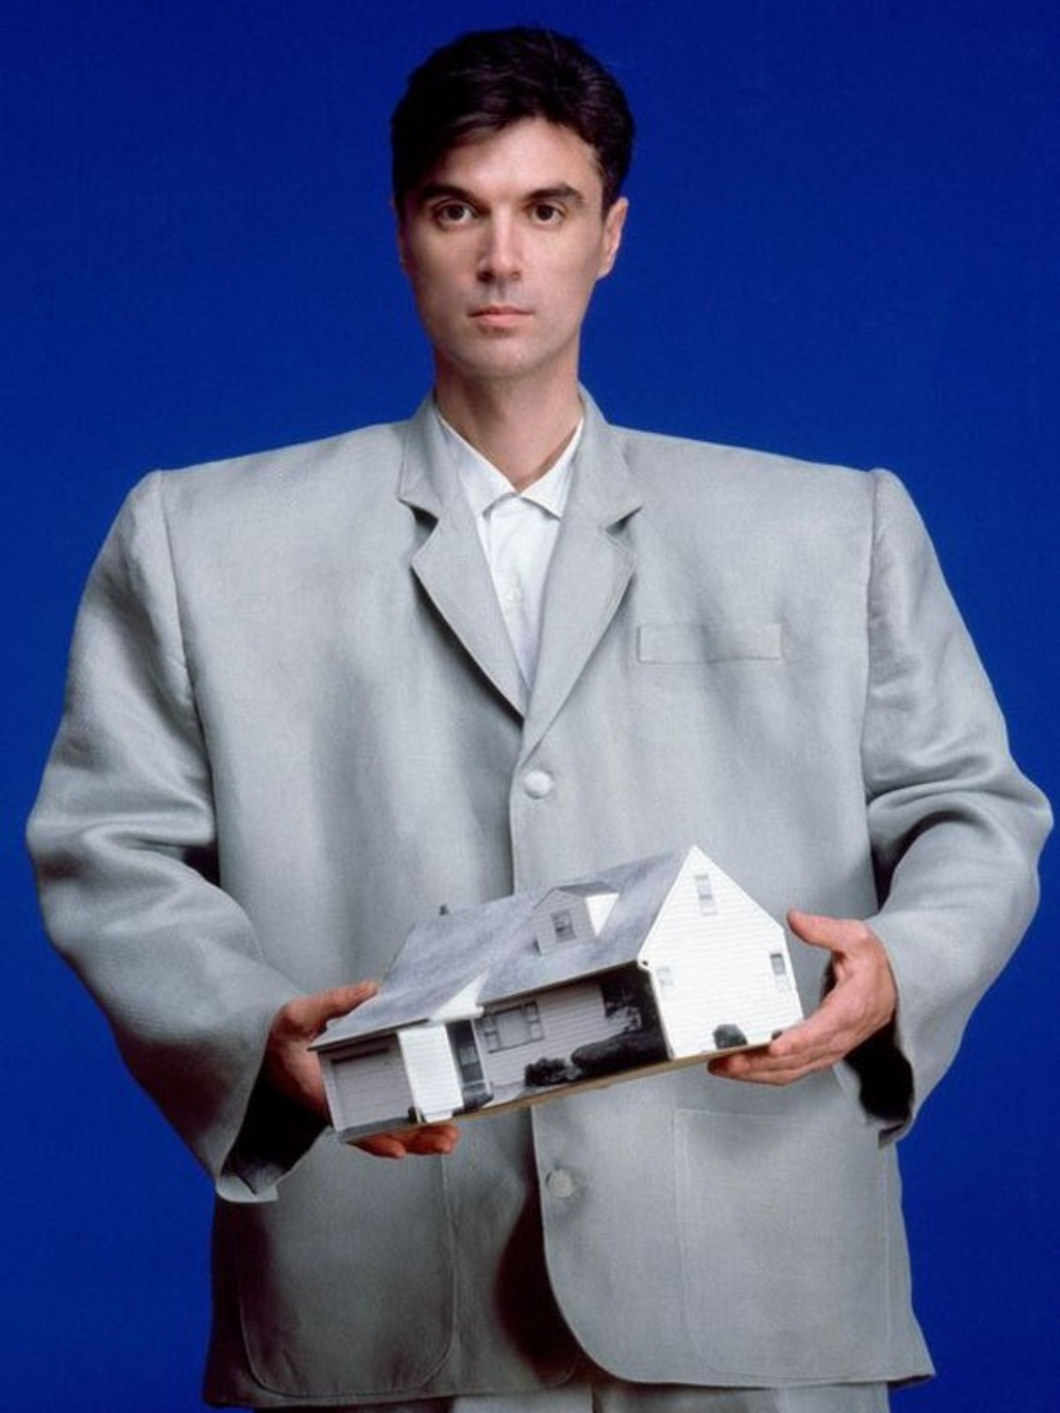 Stop Making Sense David Byrne Big Gray Cotton Suit